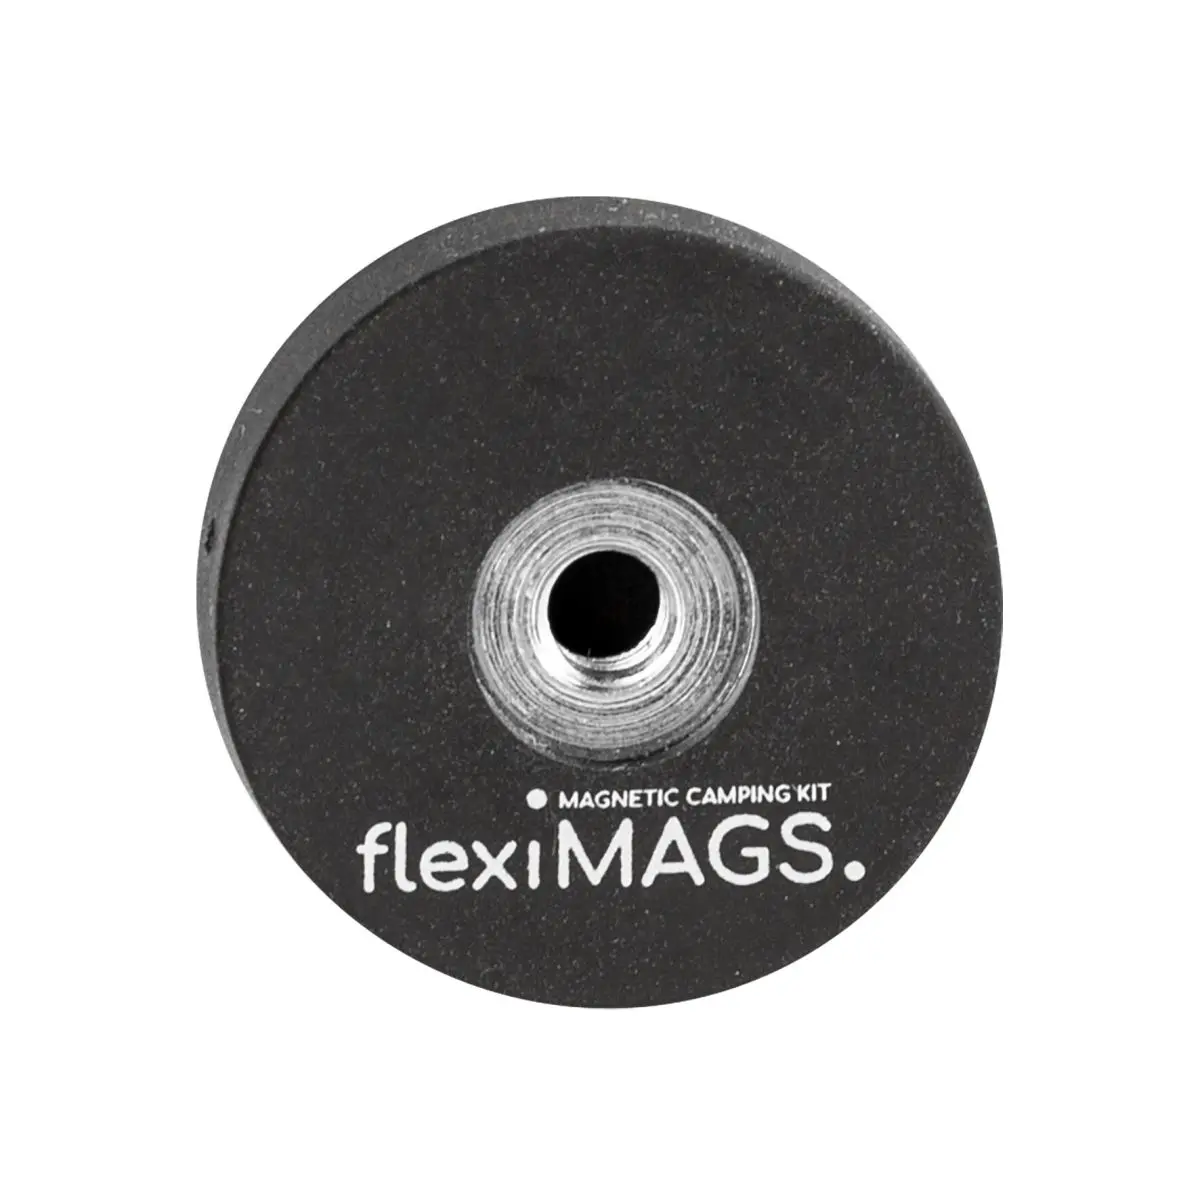 Magnet rund flexiMAGS - flexiMAG-22, 4er Set schwarz